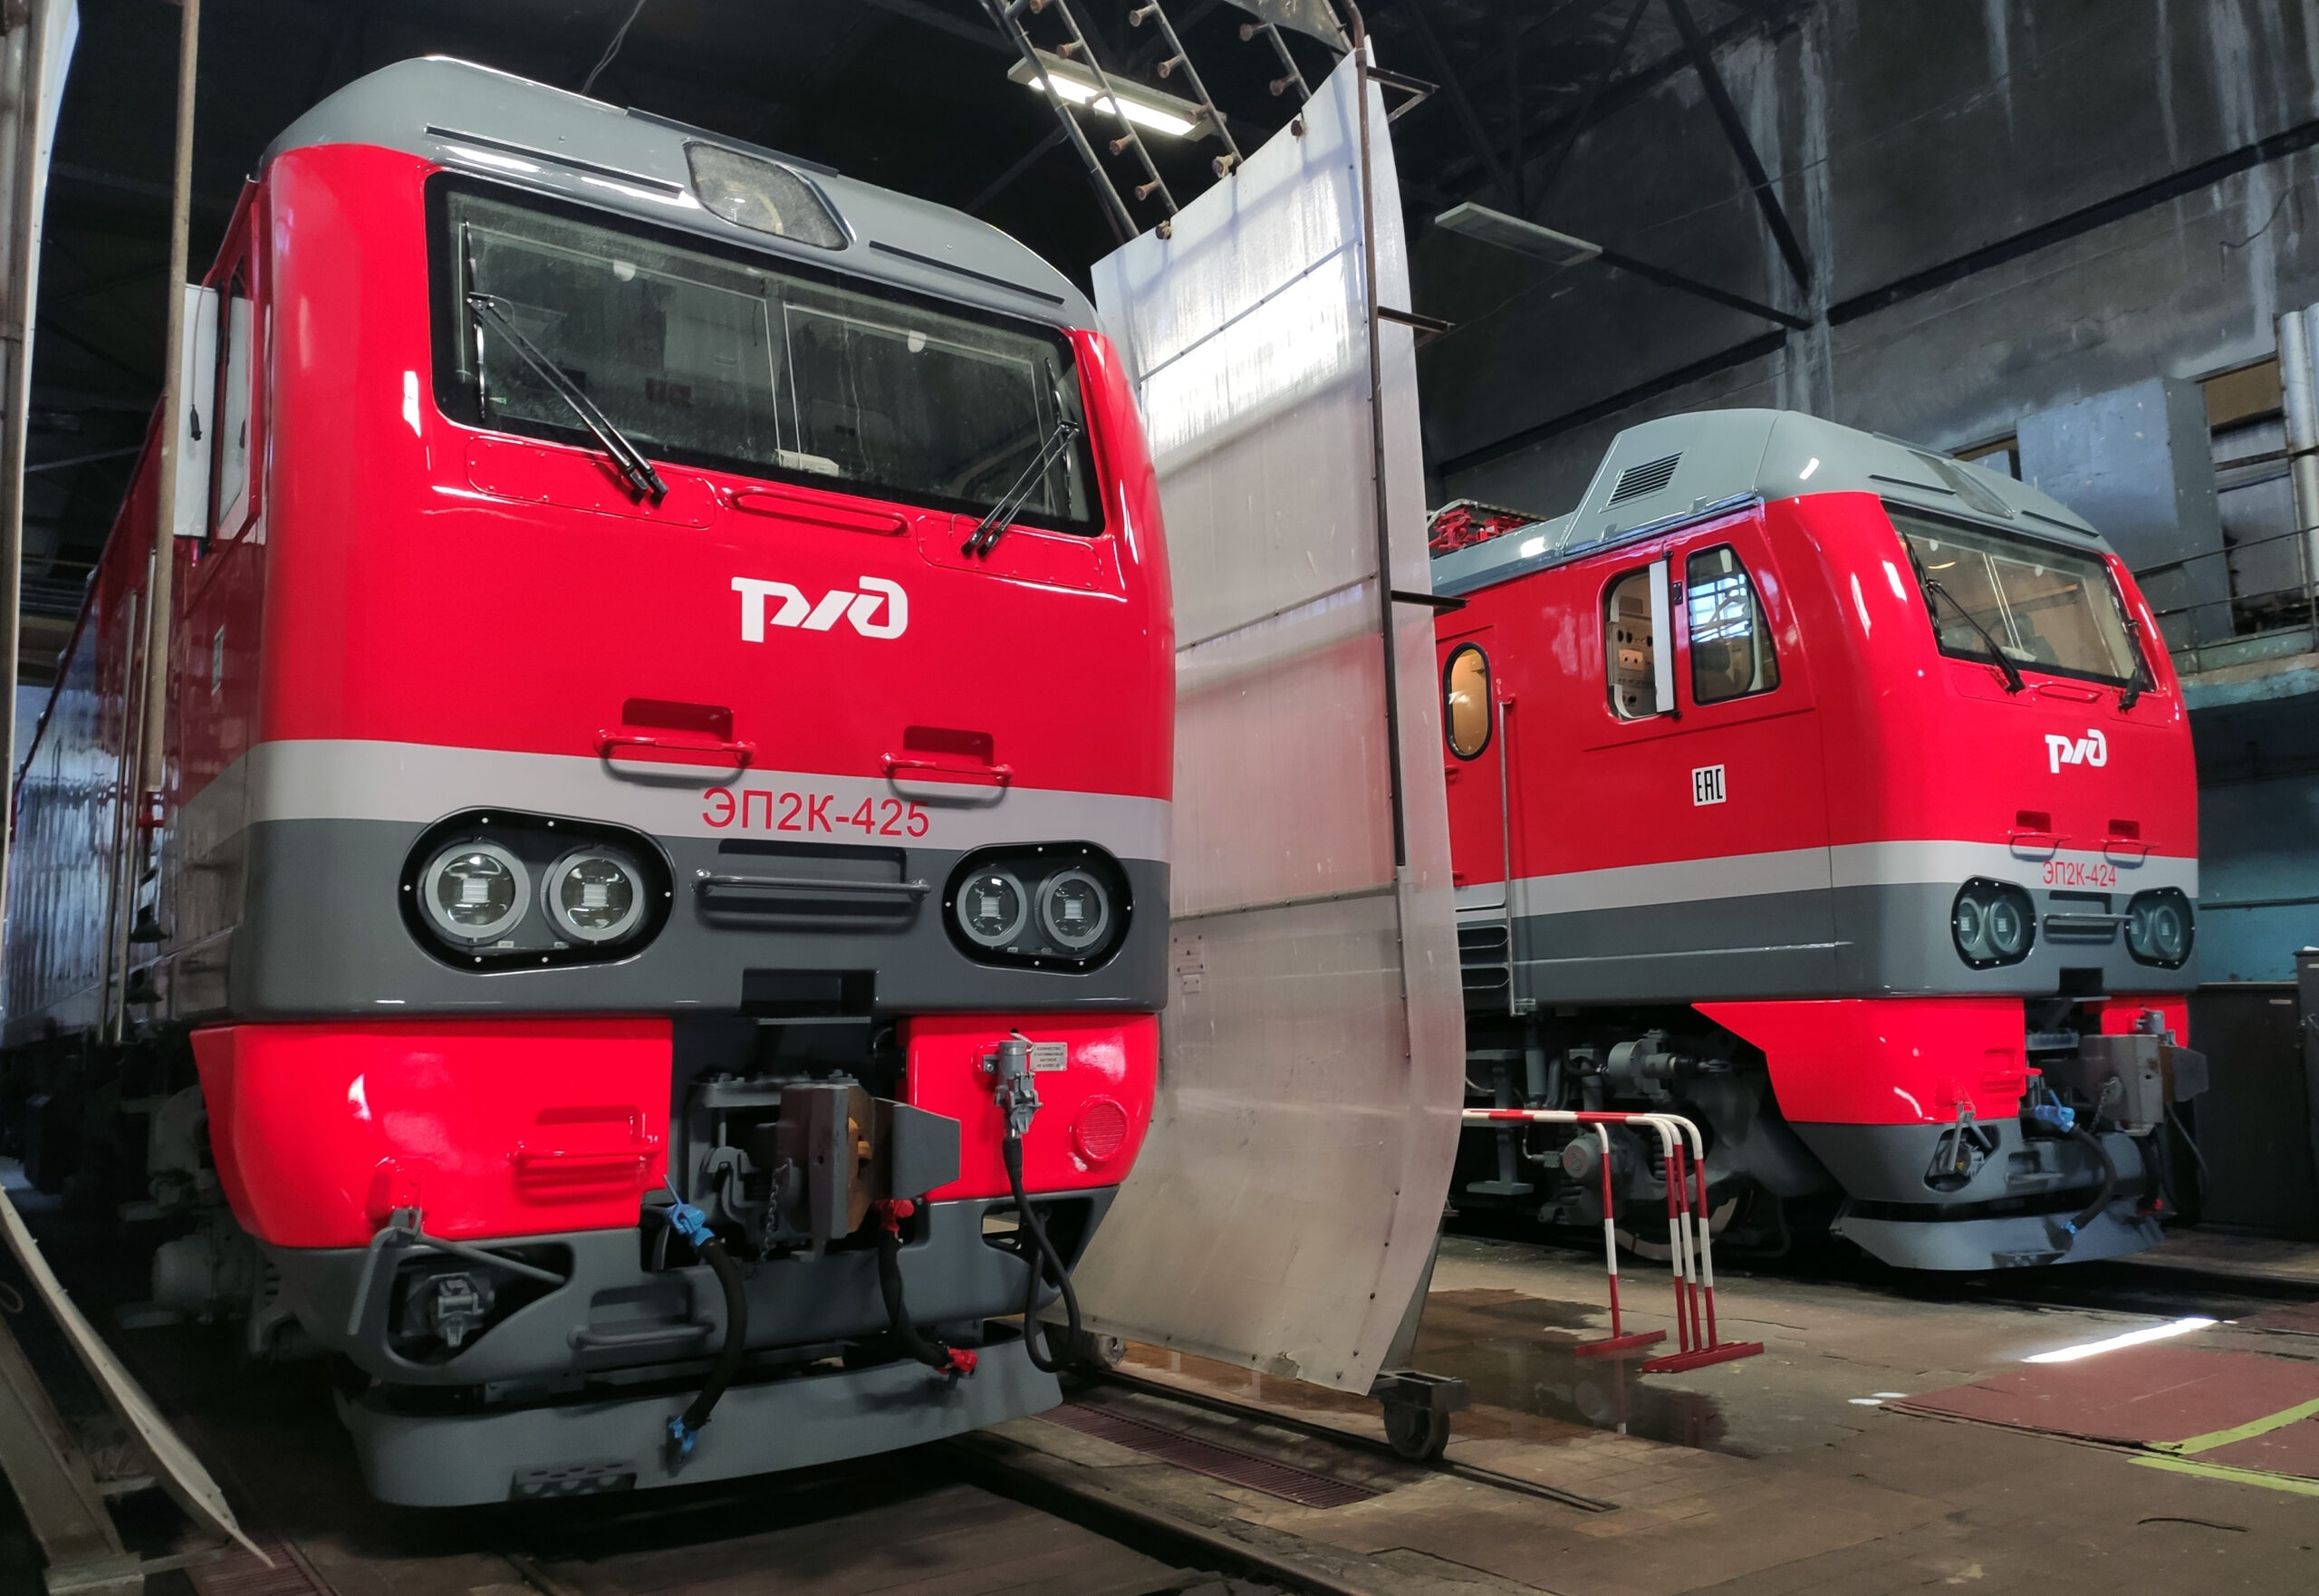 EP2K passenger locomotives